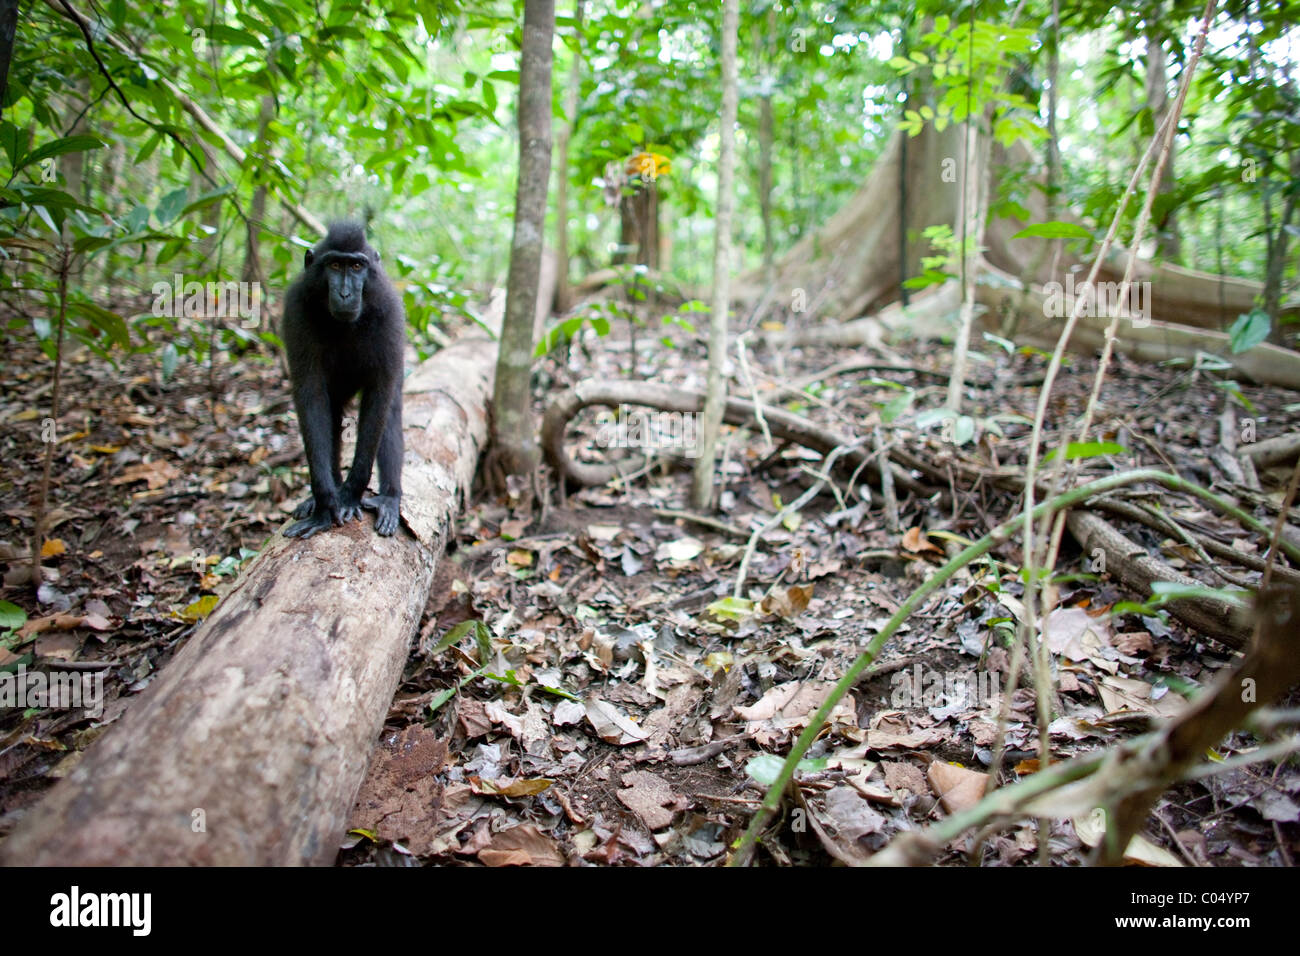 Crested Black Macaque (Macaca nigra) Stock Photo